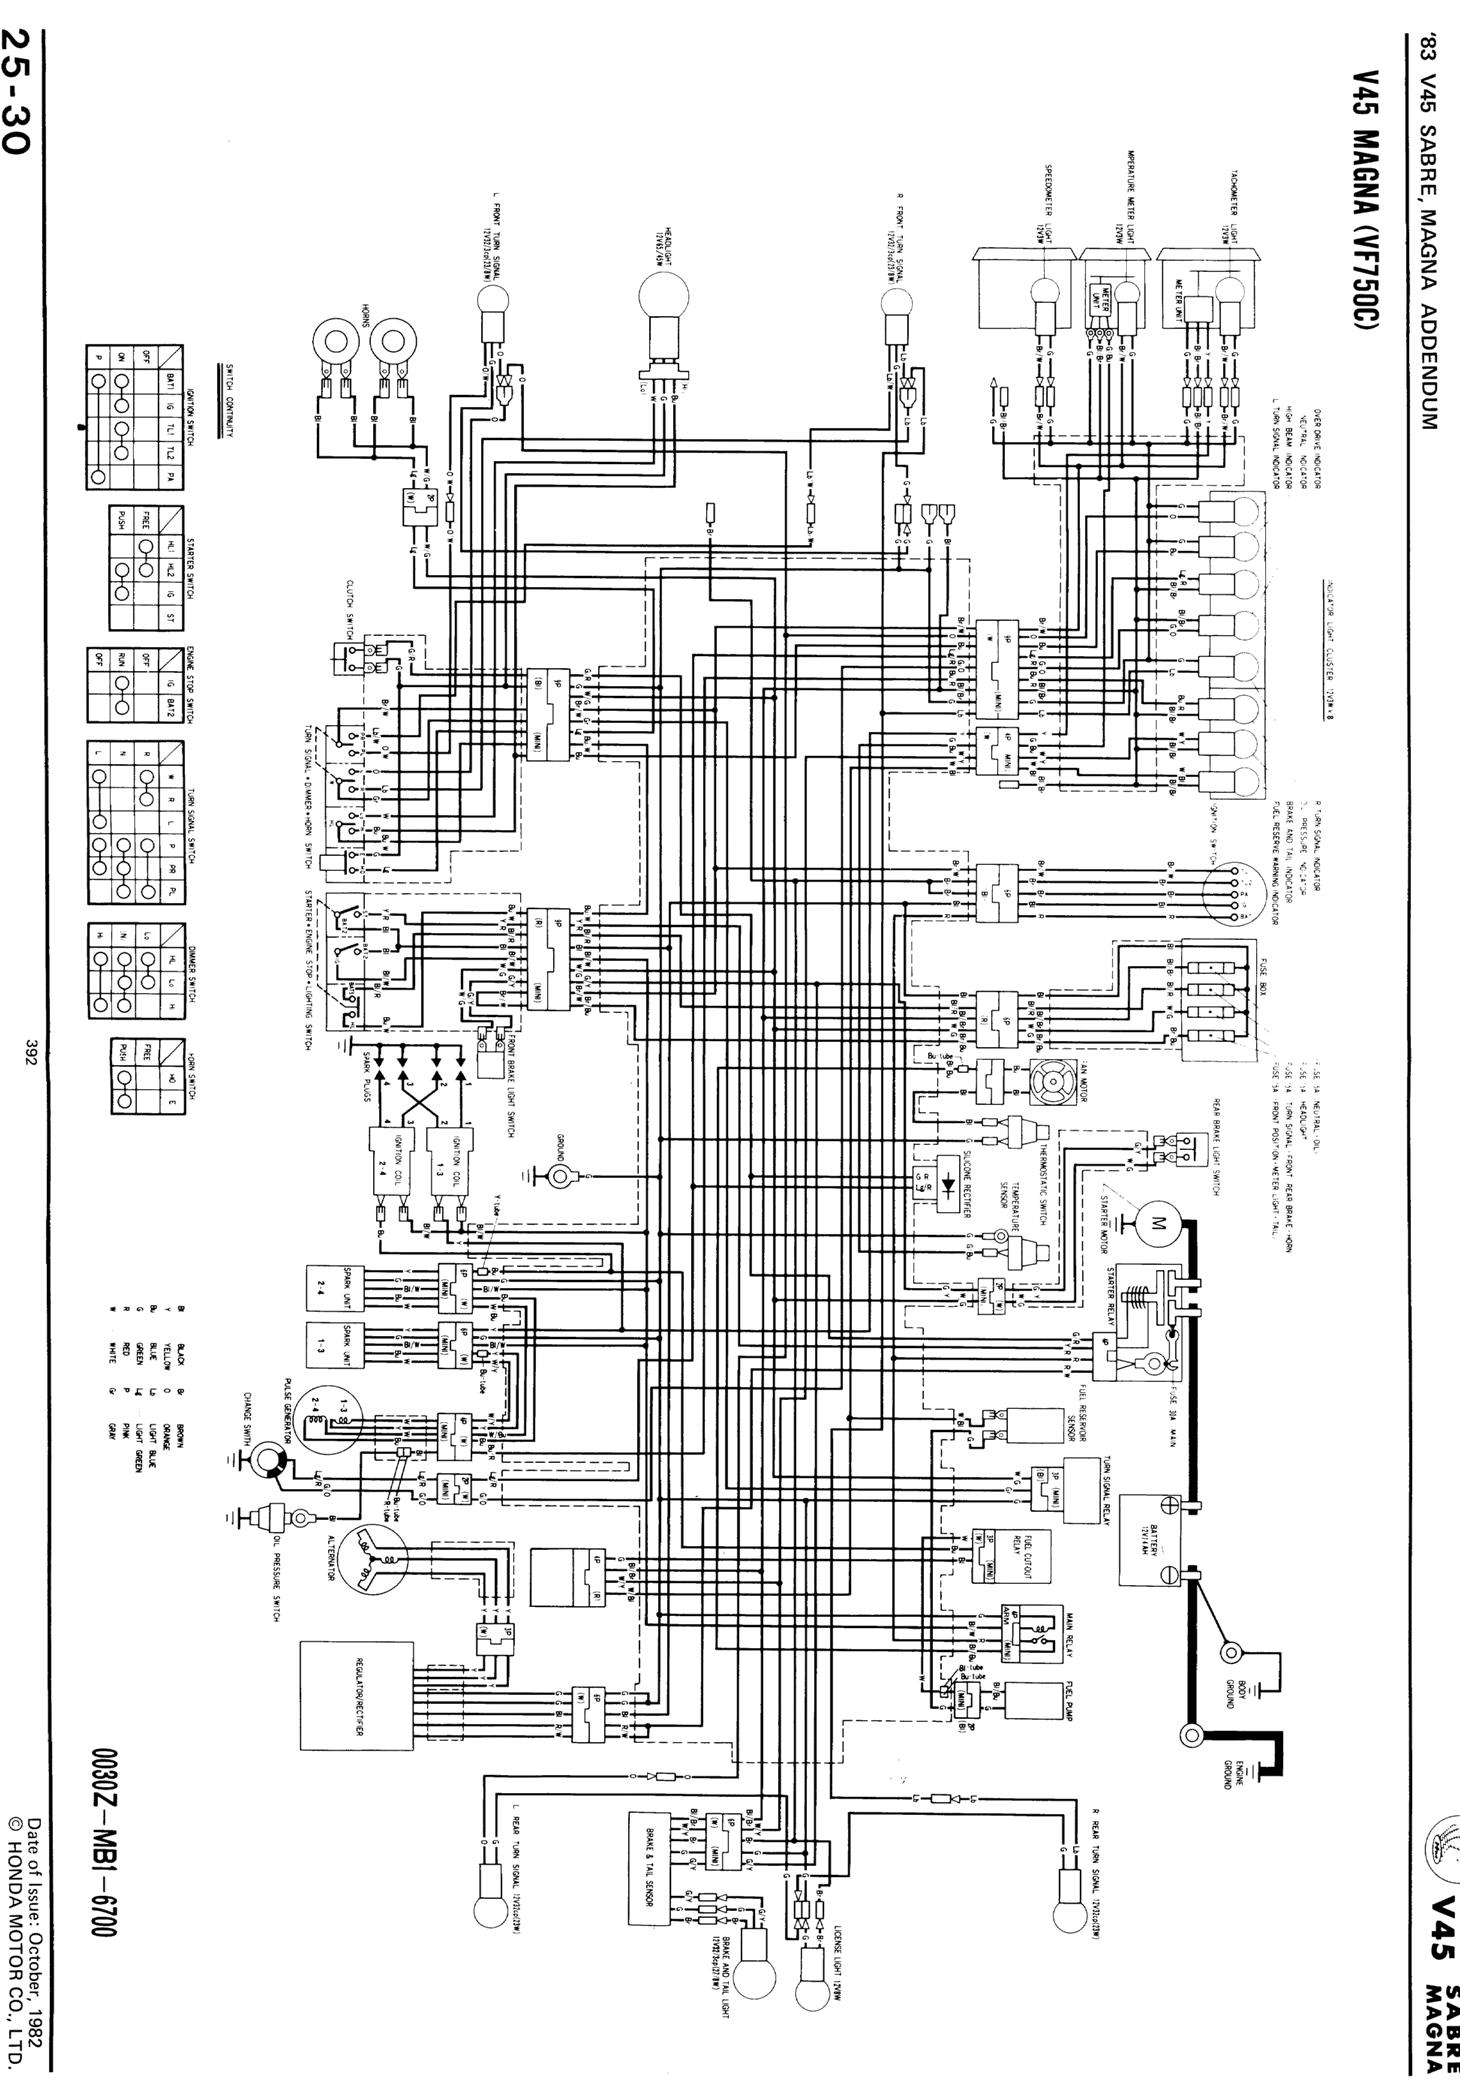 Honda v45 wiring diagram #1